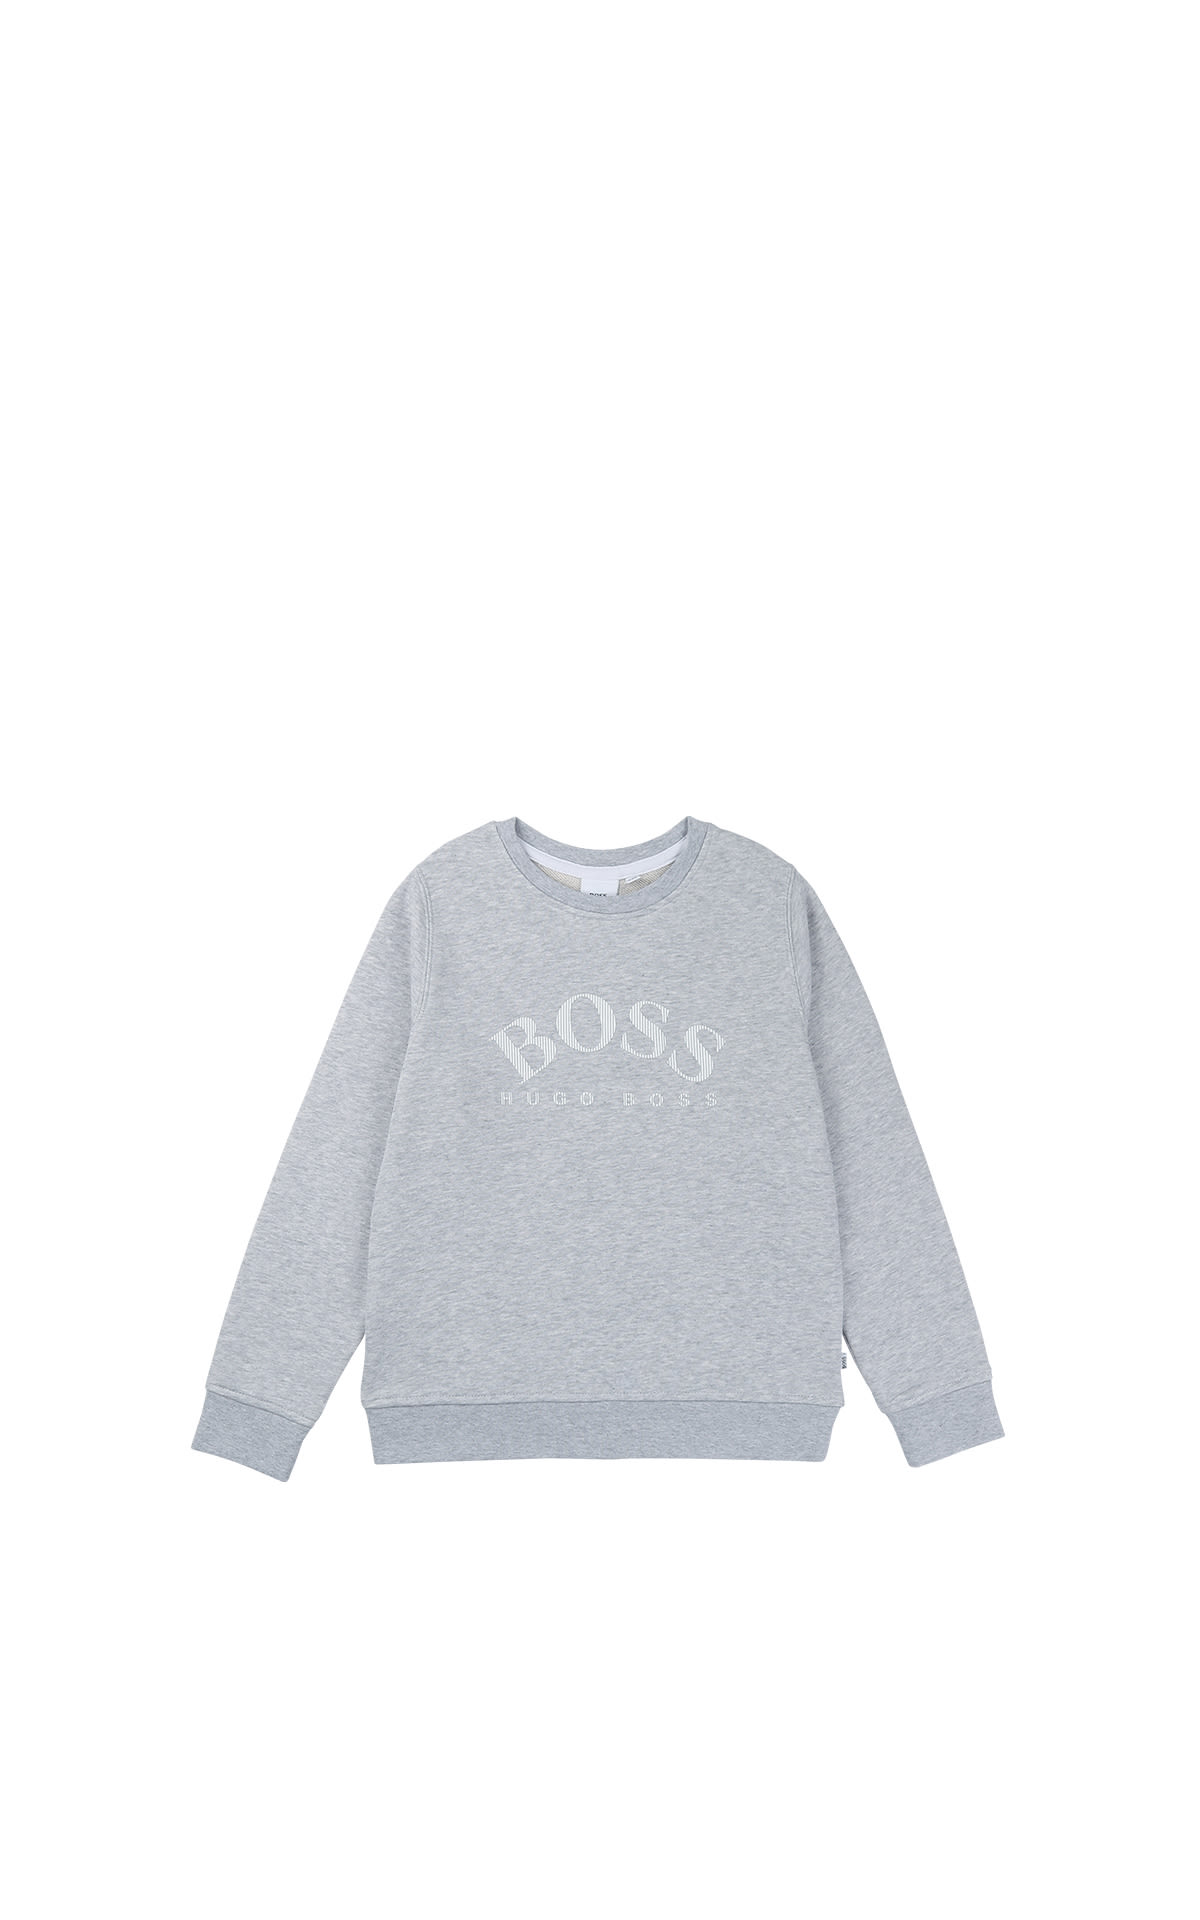 Kids around BOSS Kidswear boy grey logo fleece sweater La Vallée Village